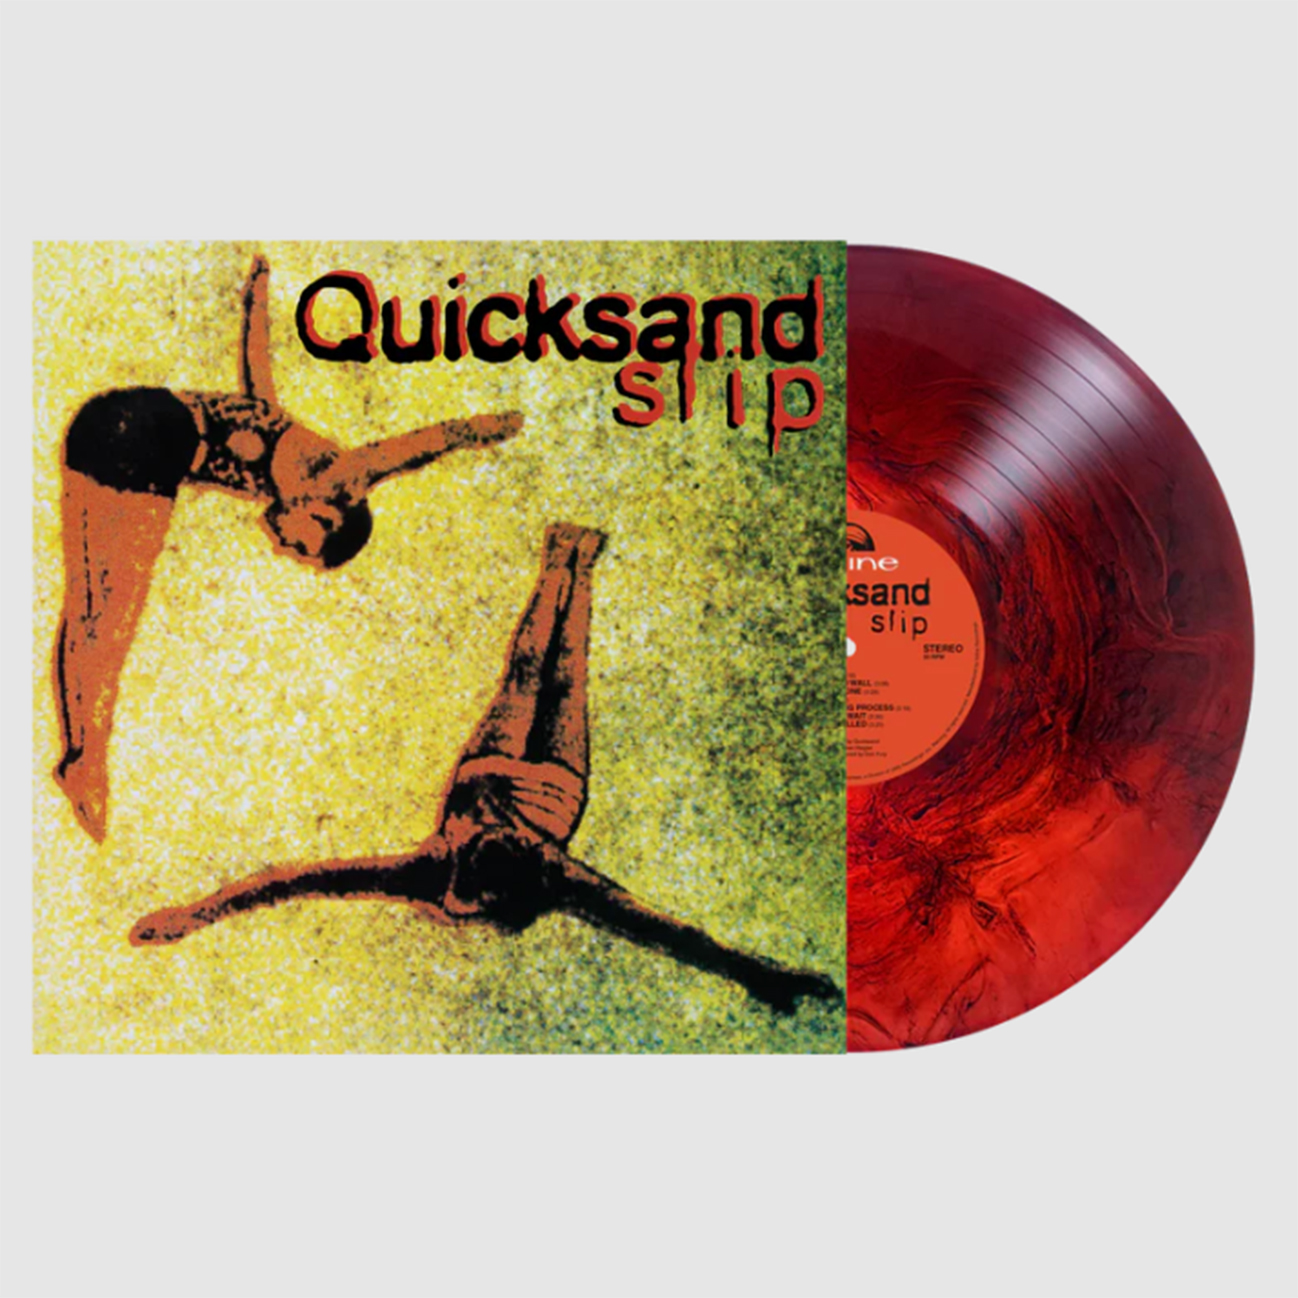 Quicksand – Slip -Vinyl colored red galaxy